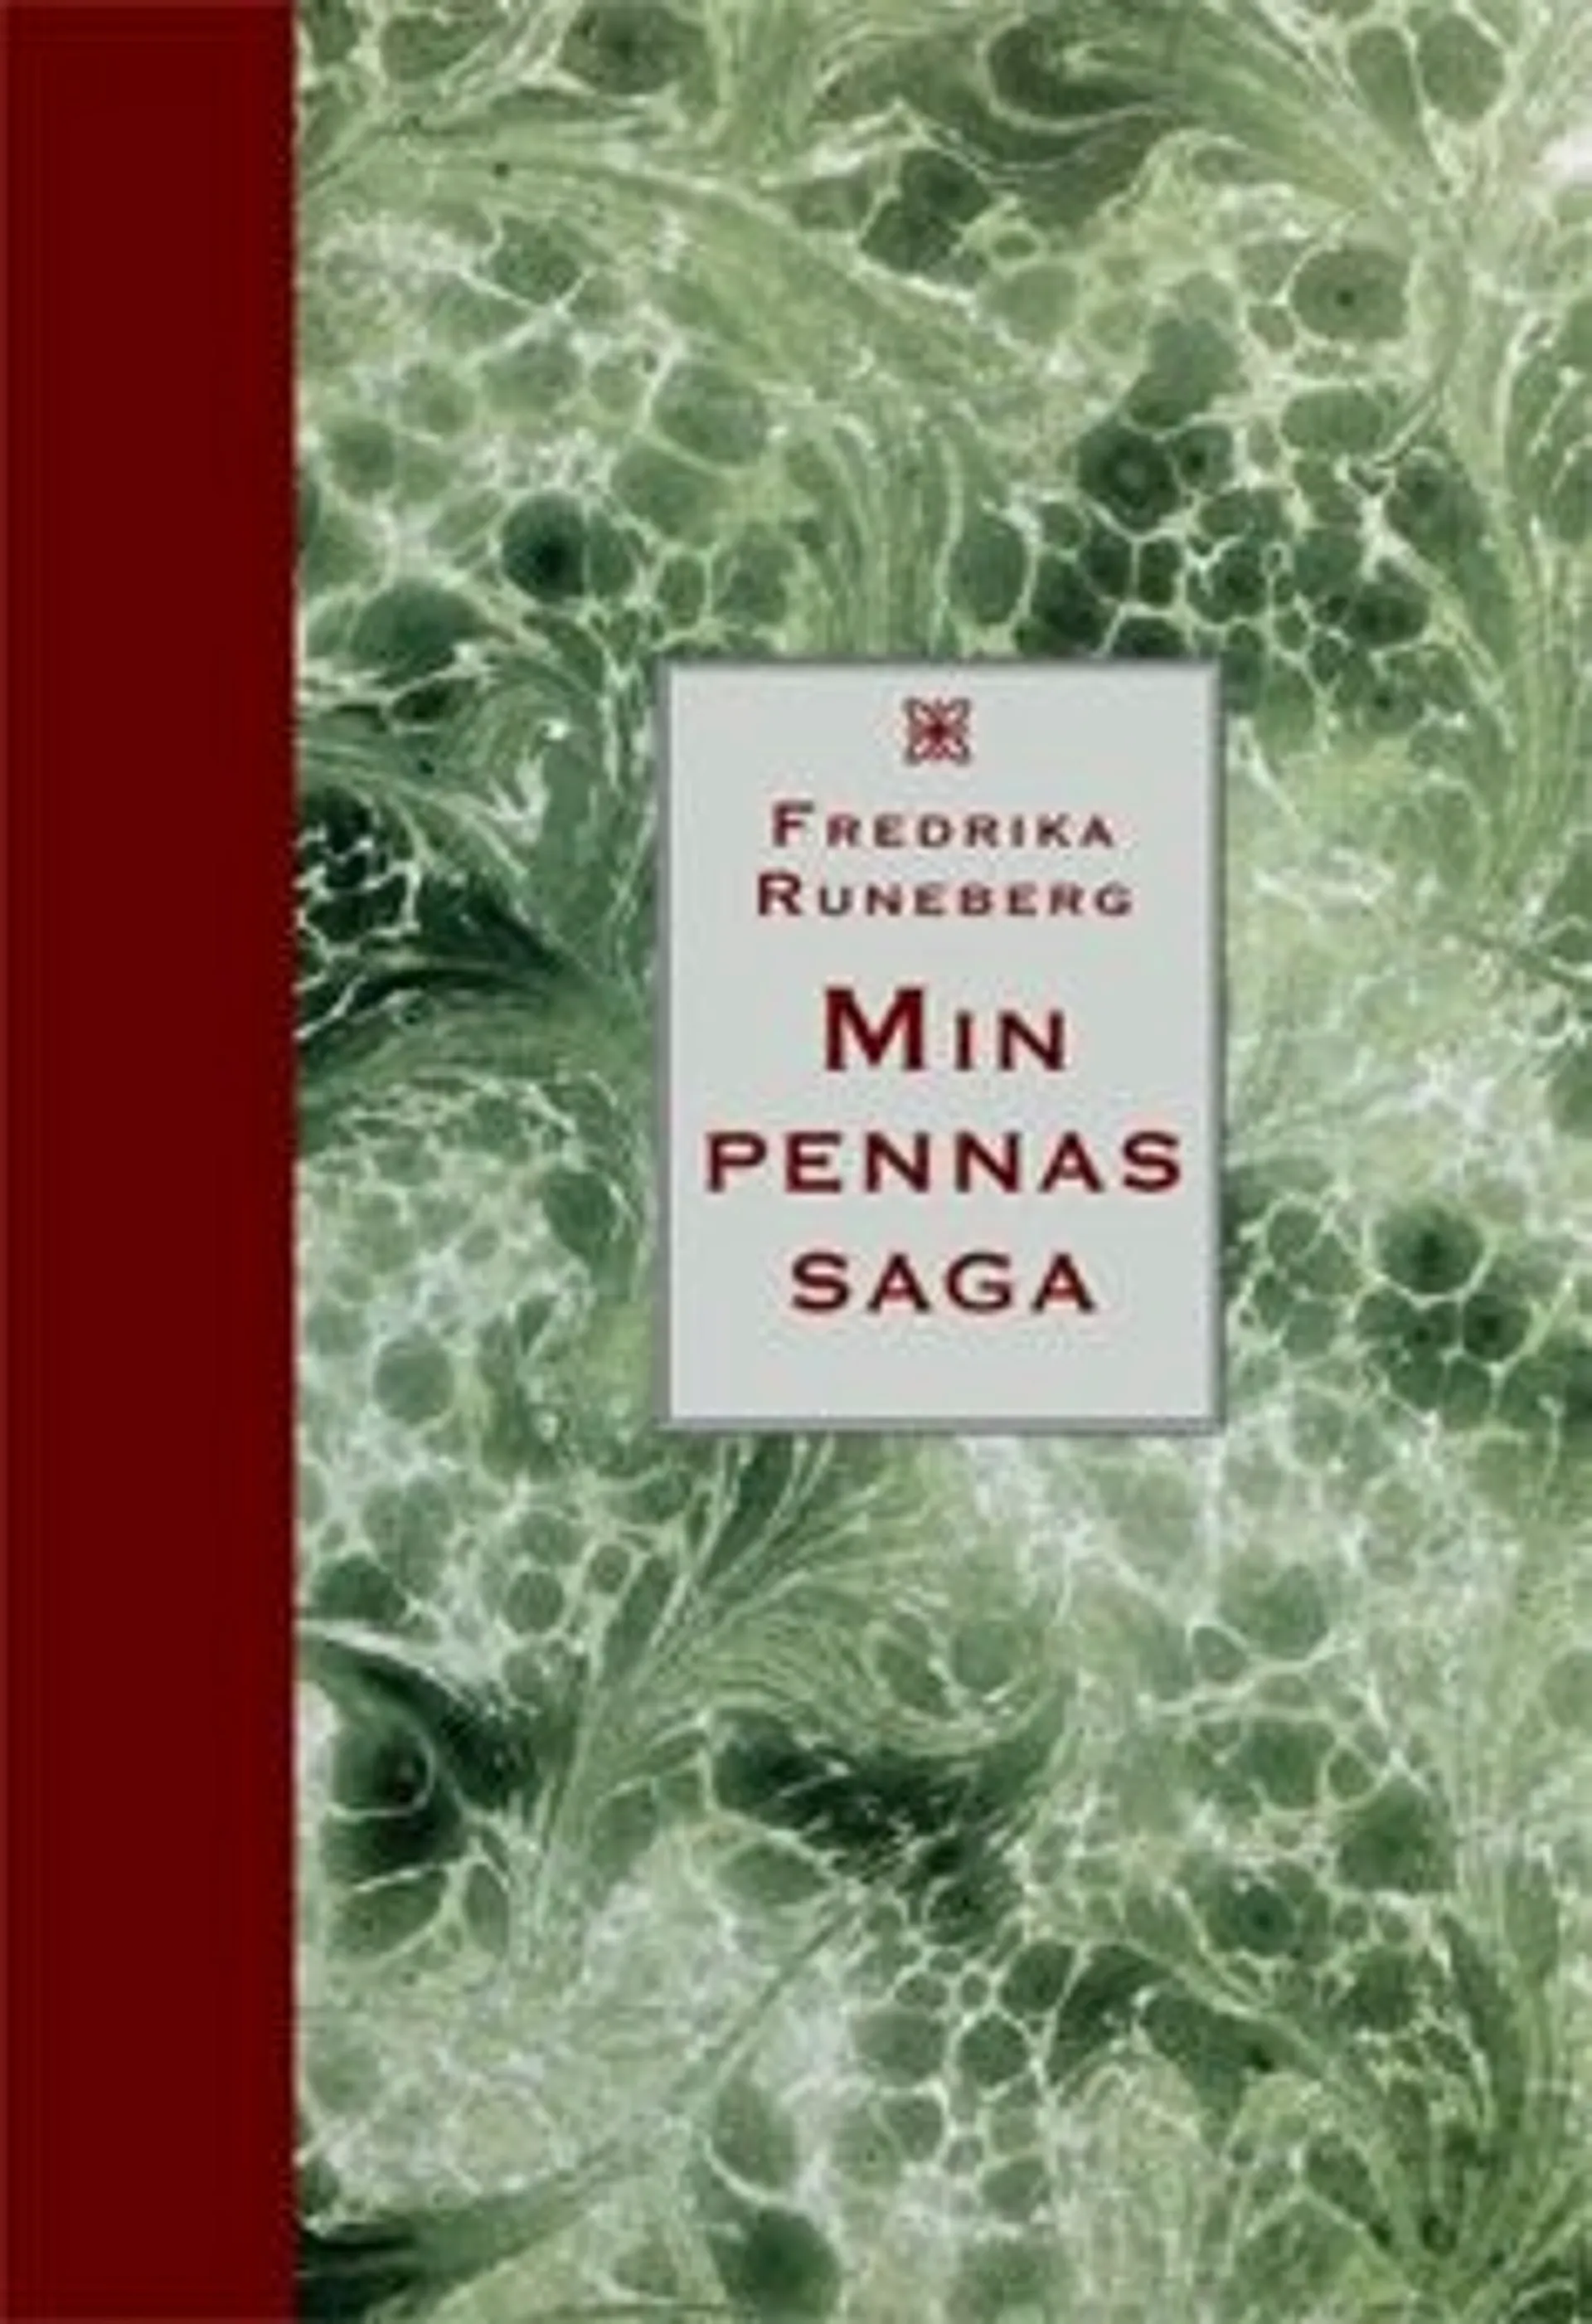 Runeberg, Min pennans saga